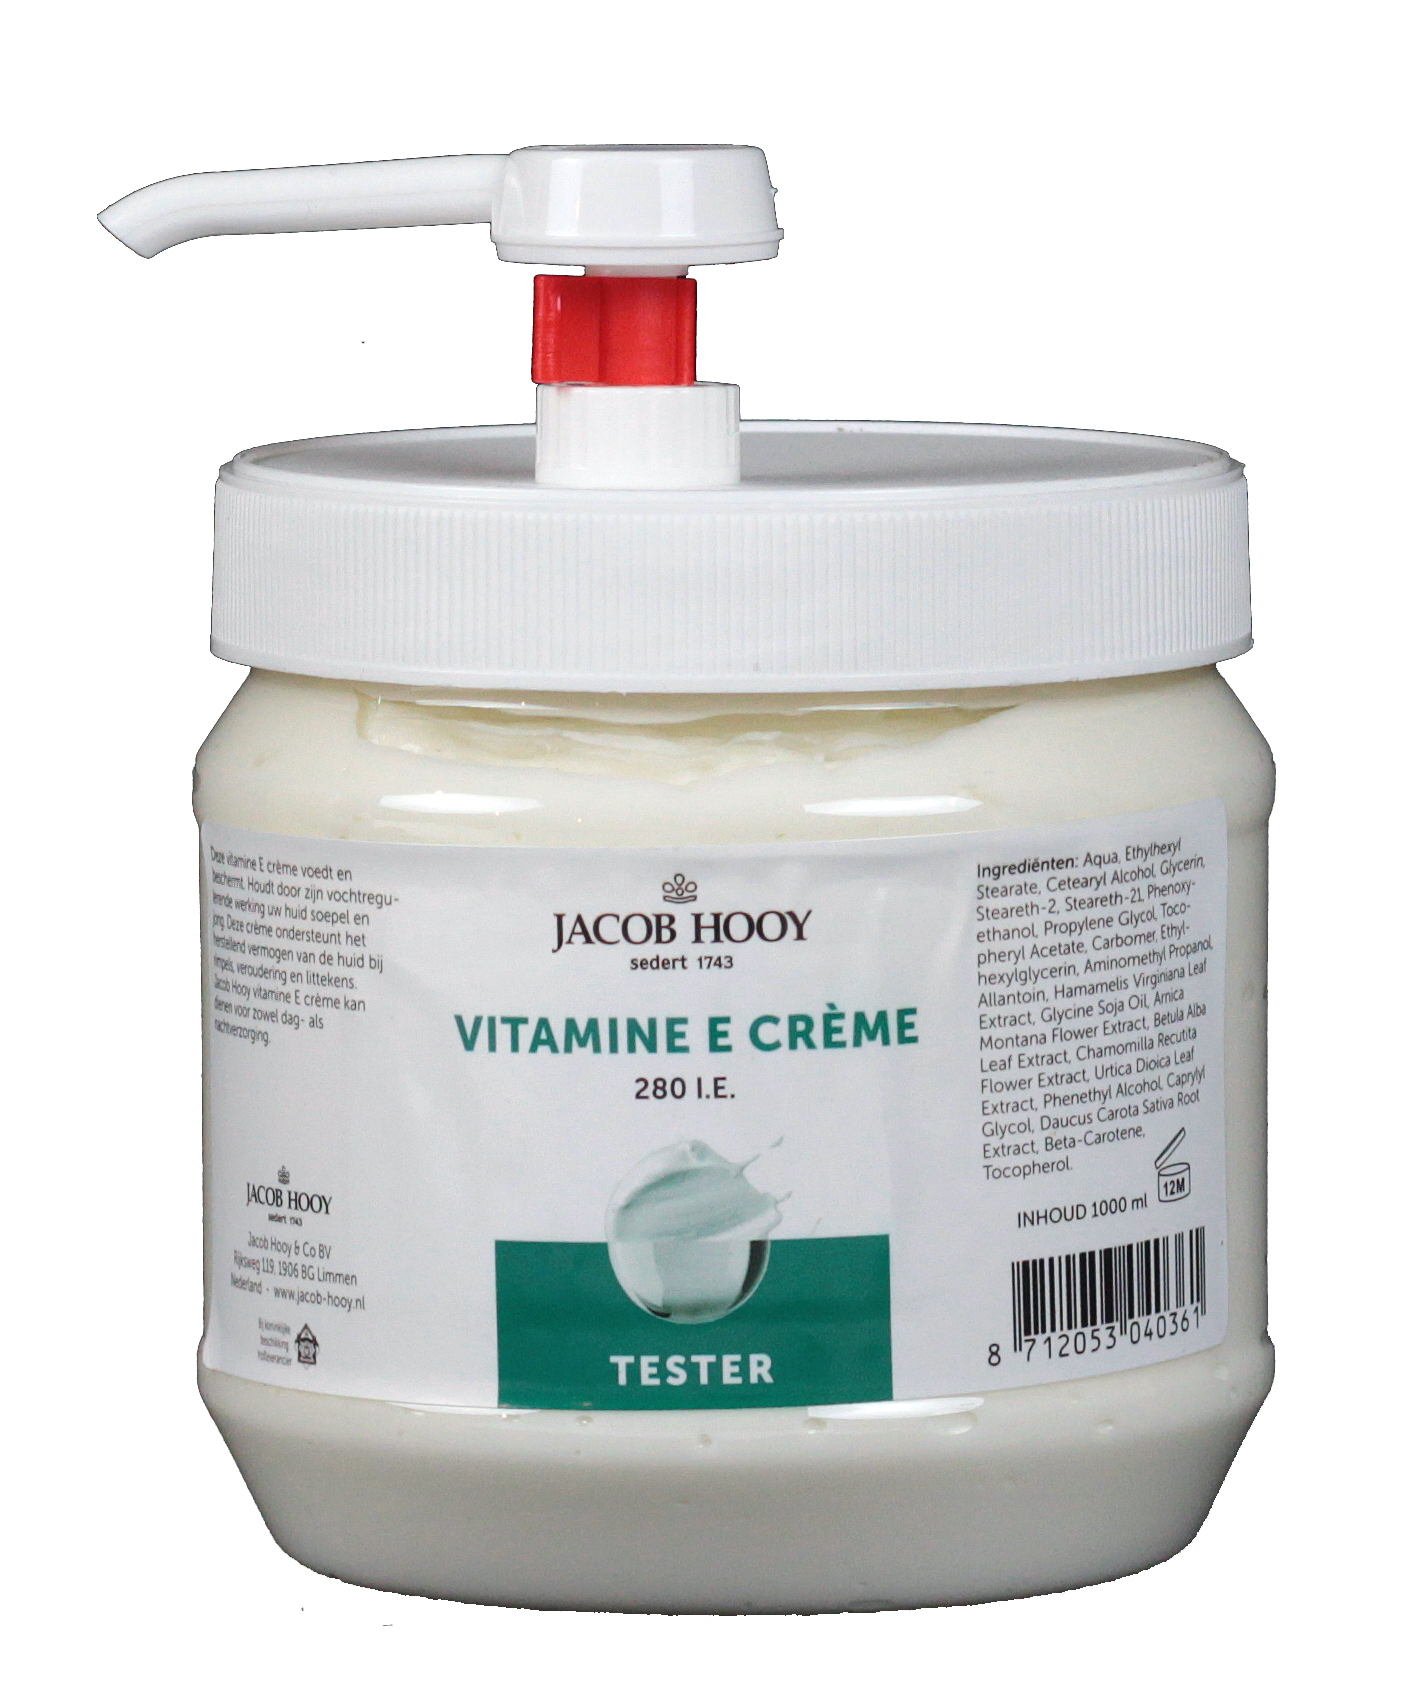 Tester Vitamine E Crème 280 I.E. 1000 ml